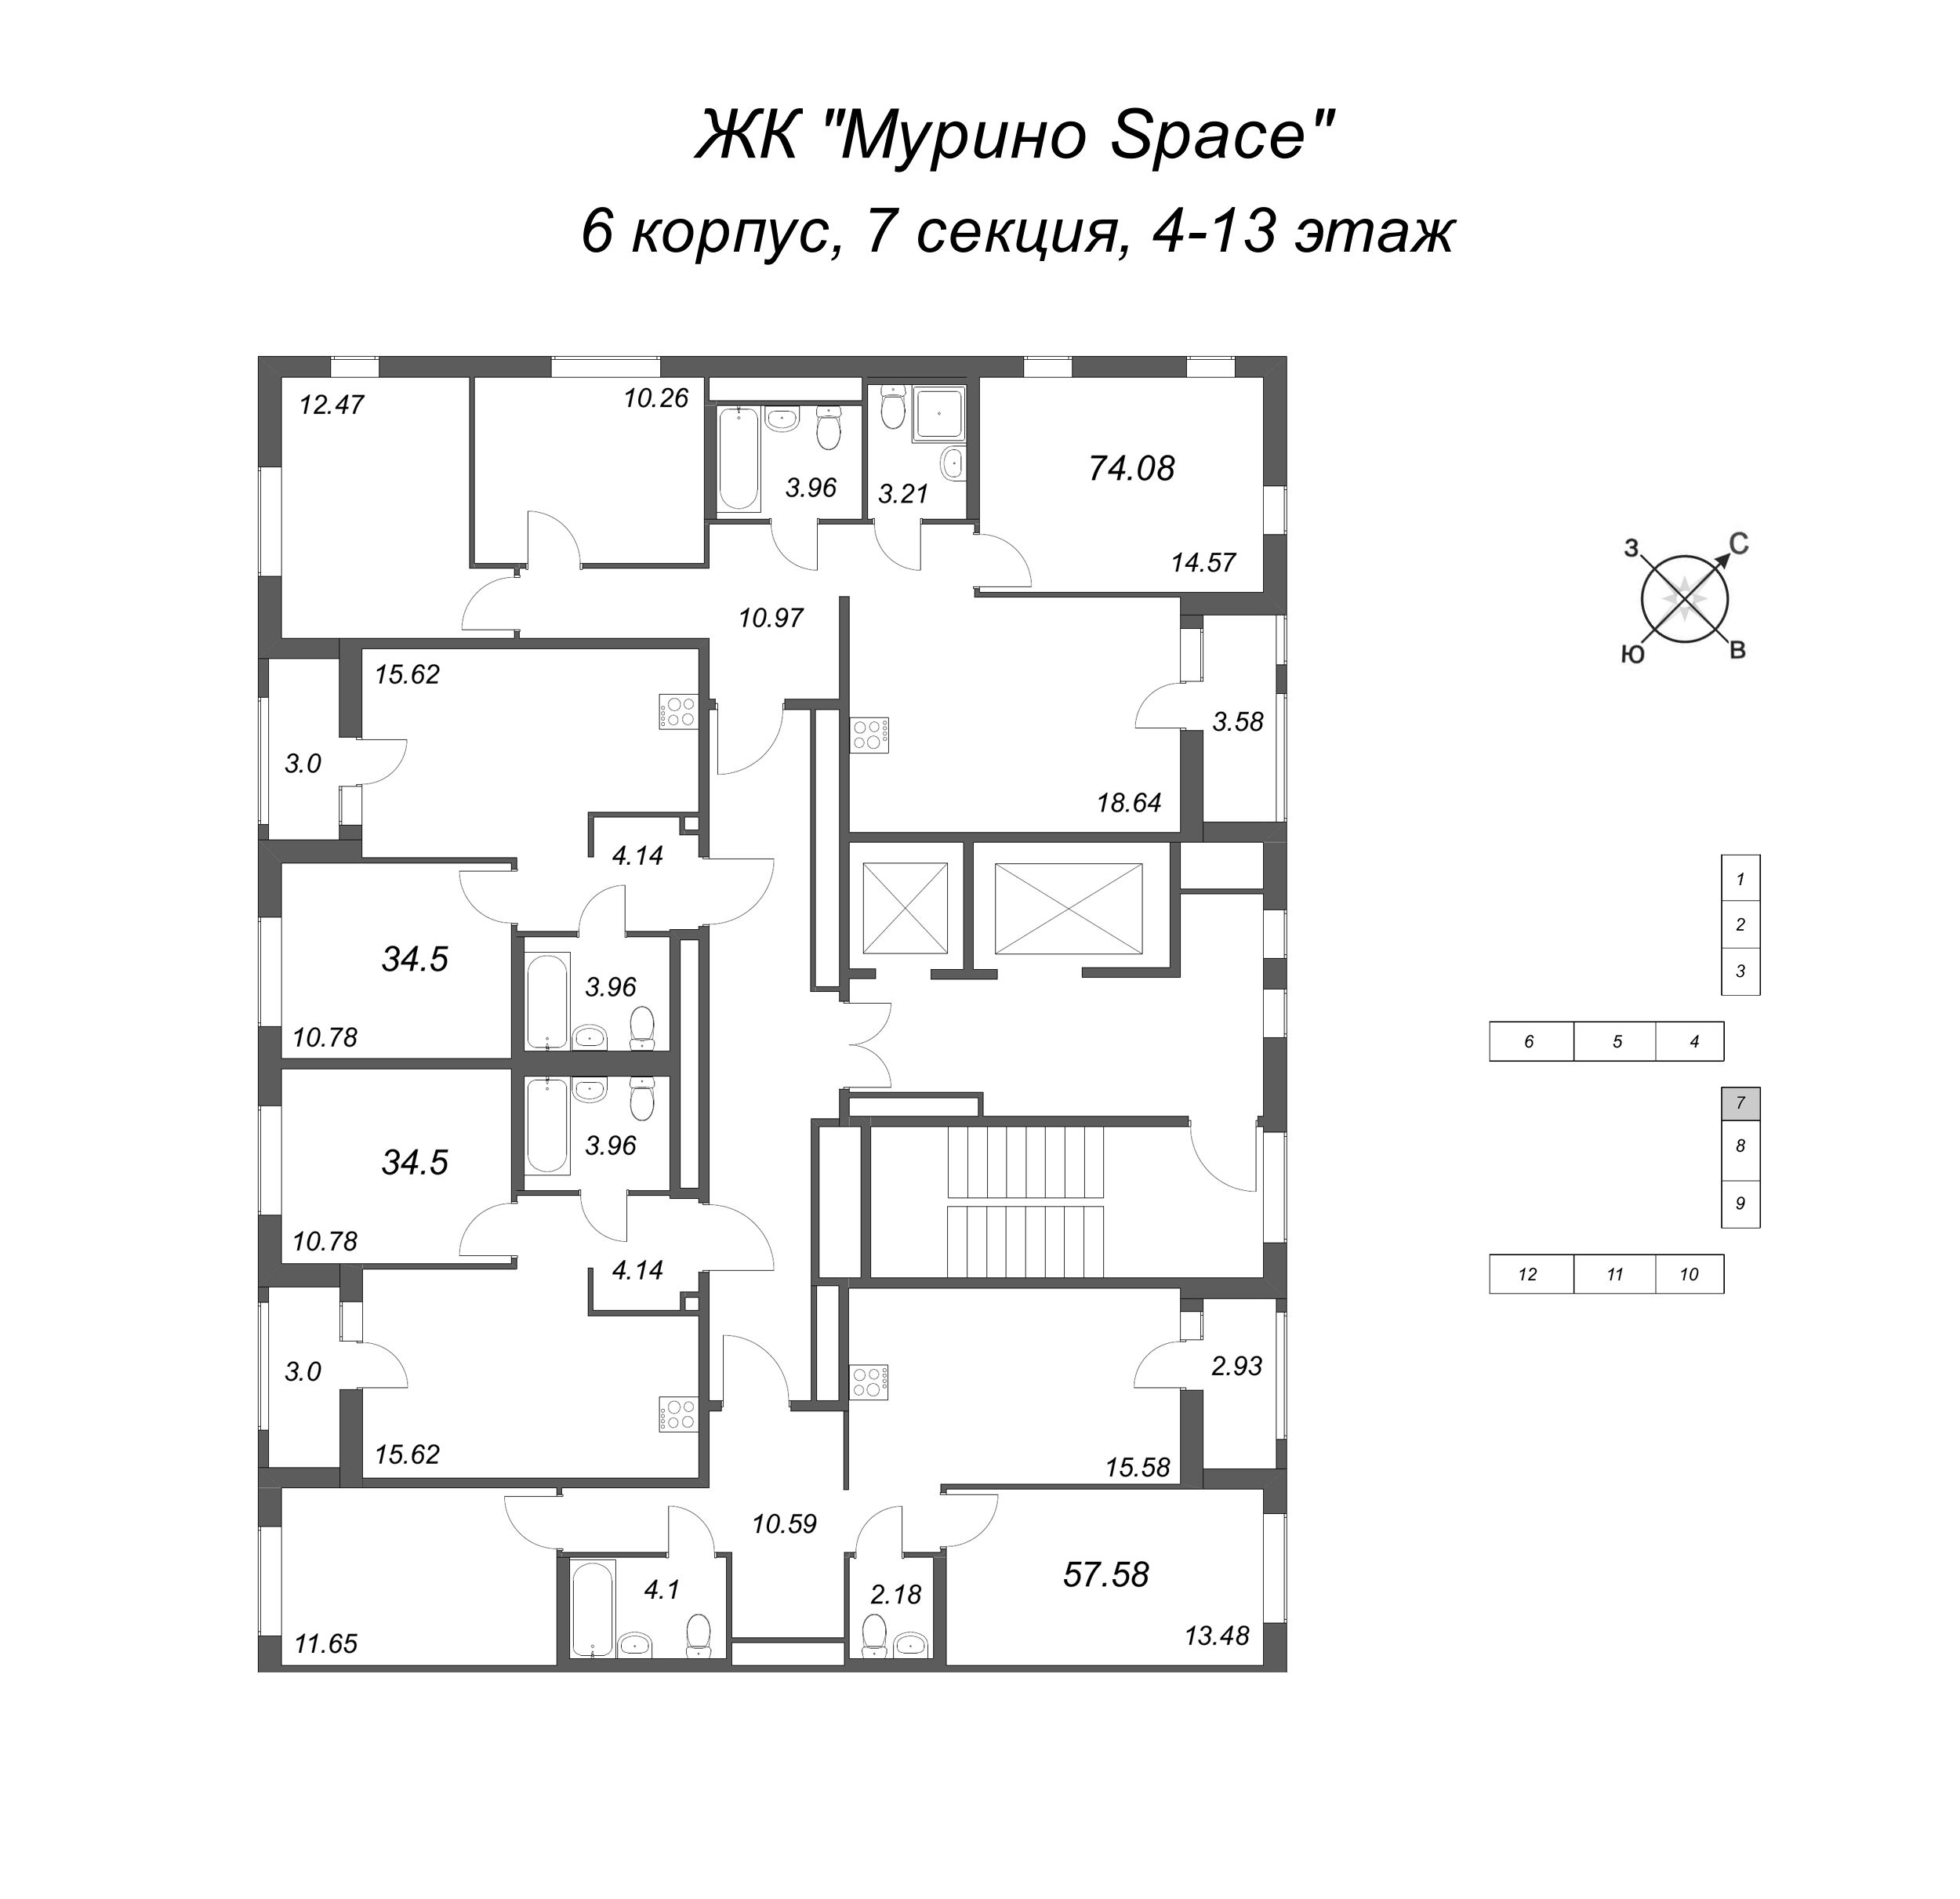 4-комнатная (Евро) квартира, 74.08 м² в ЖК "Мурино Space" - планировка этажа